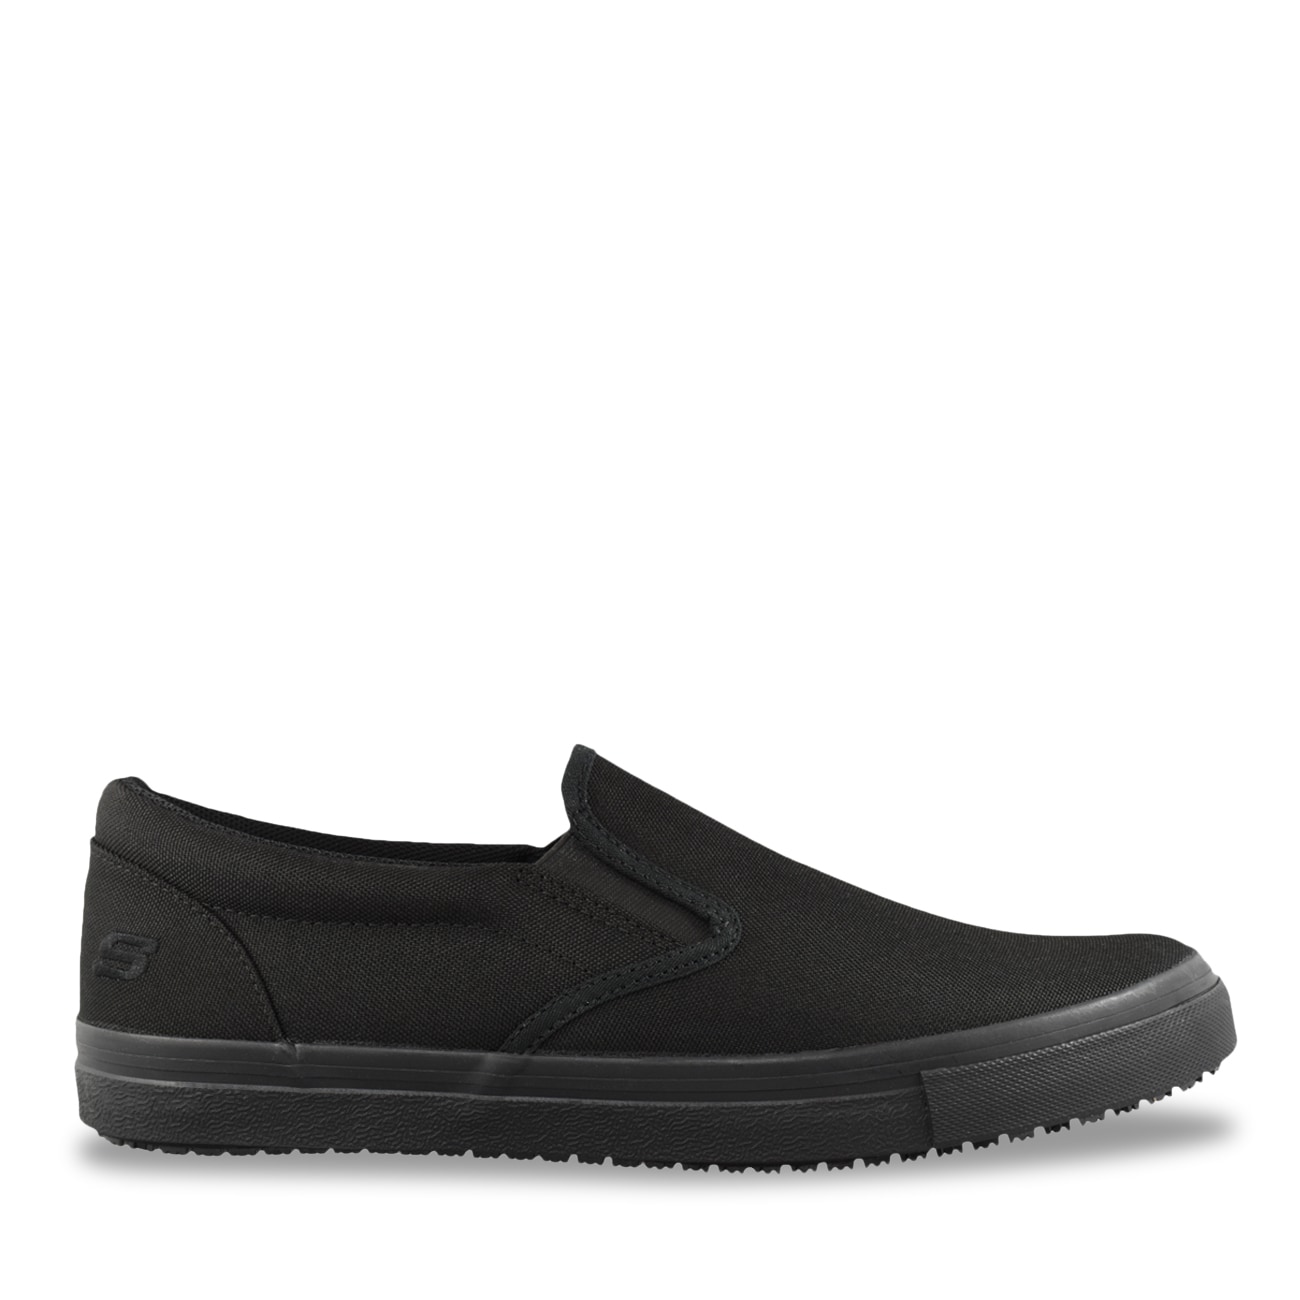 Skechers Men's Relaxed Fit Sudler Slip-On Sneaker | The Shoe Company